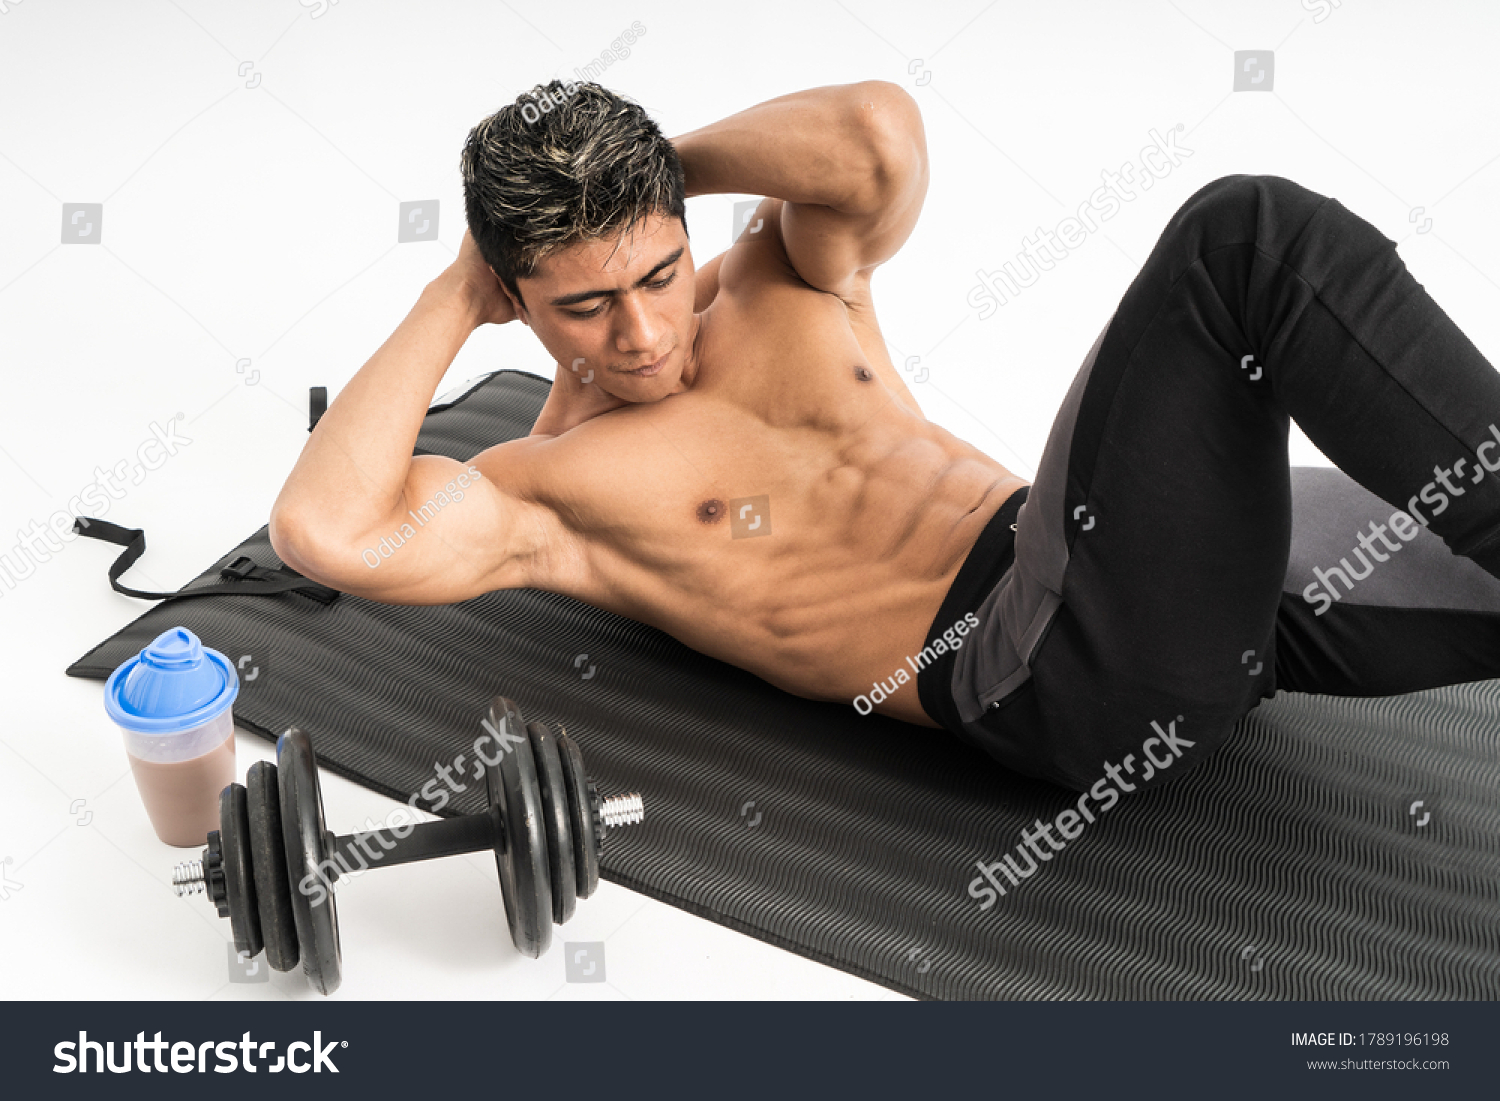 Muscle Man Without Clothes Do Sit Stok Fotoğrafı 1789196198 Shutterstock.